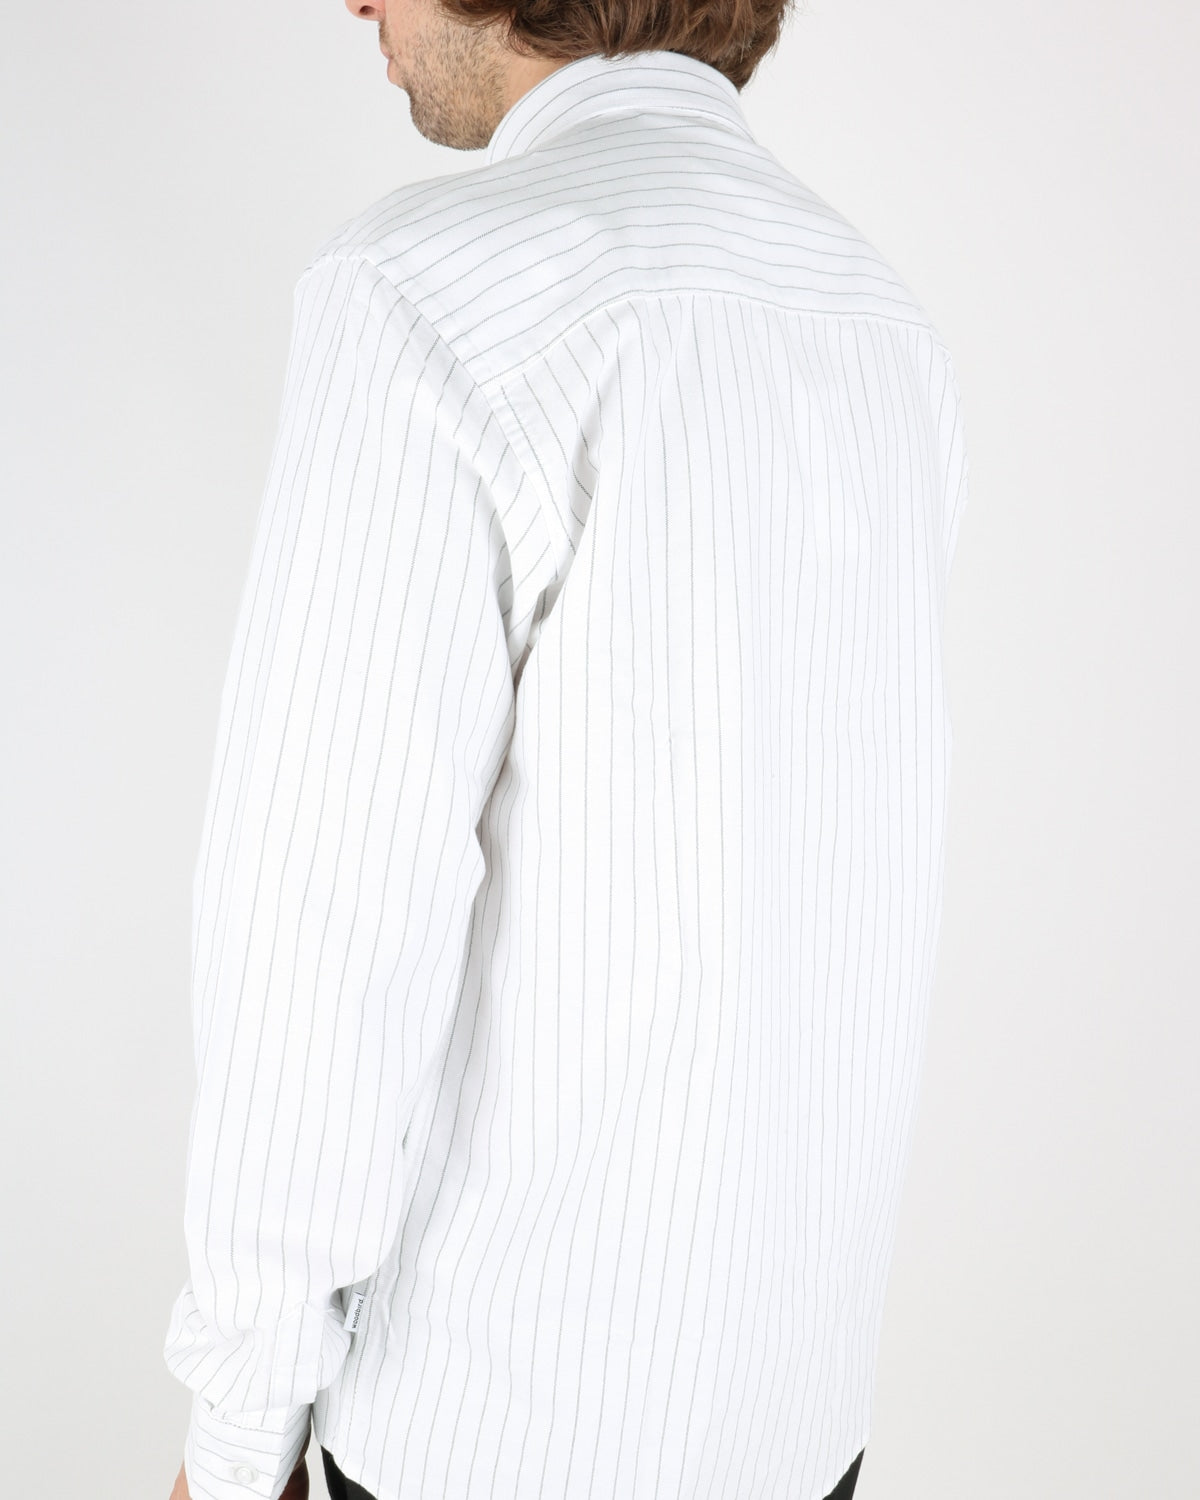 woodbird_trime stripe shirt_white grey_4_4